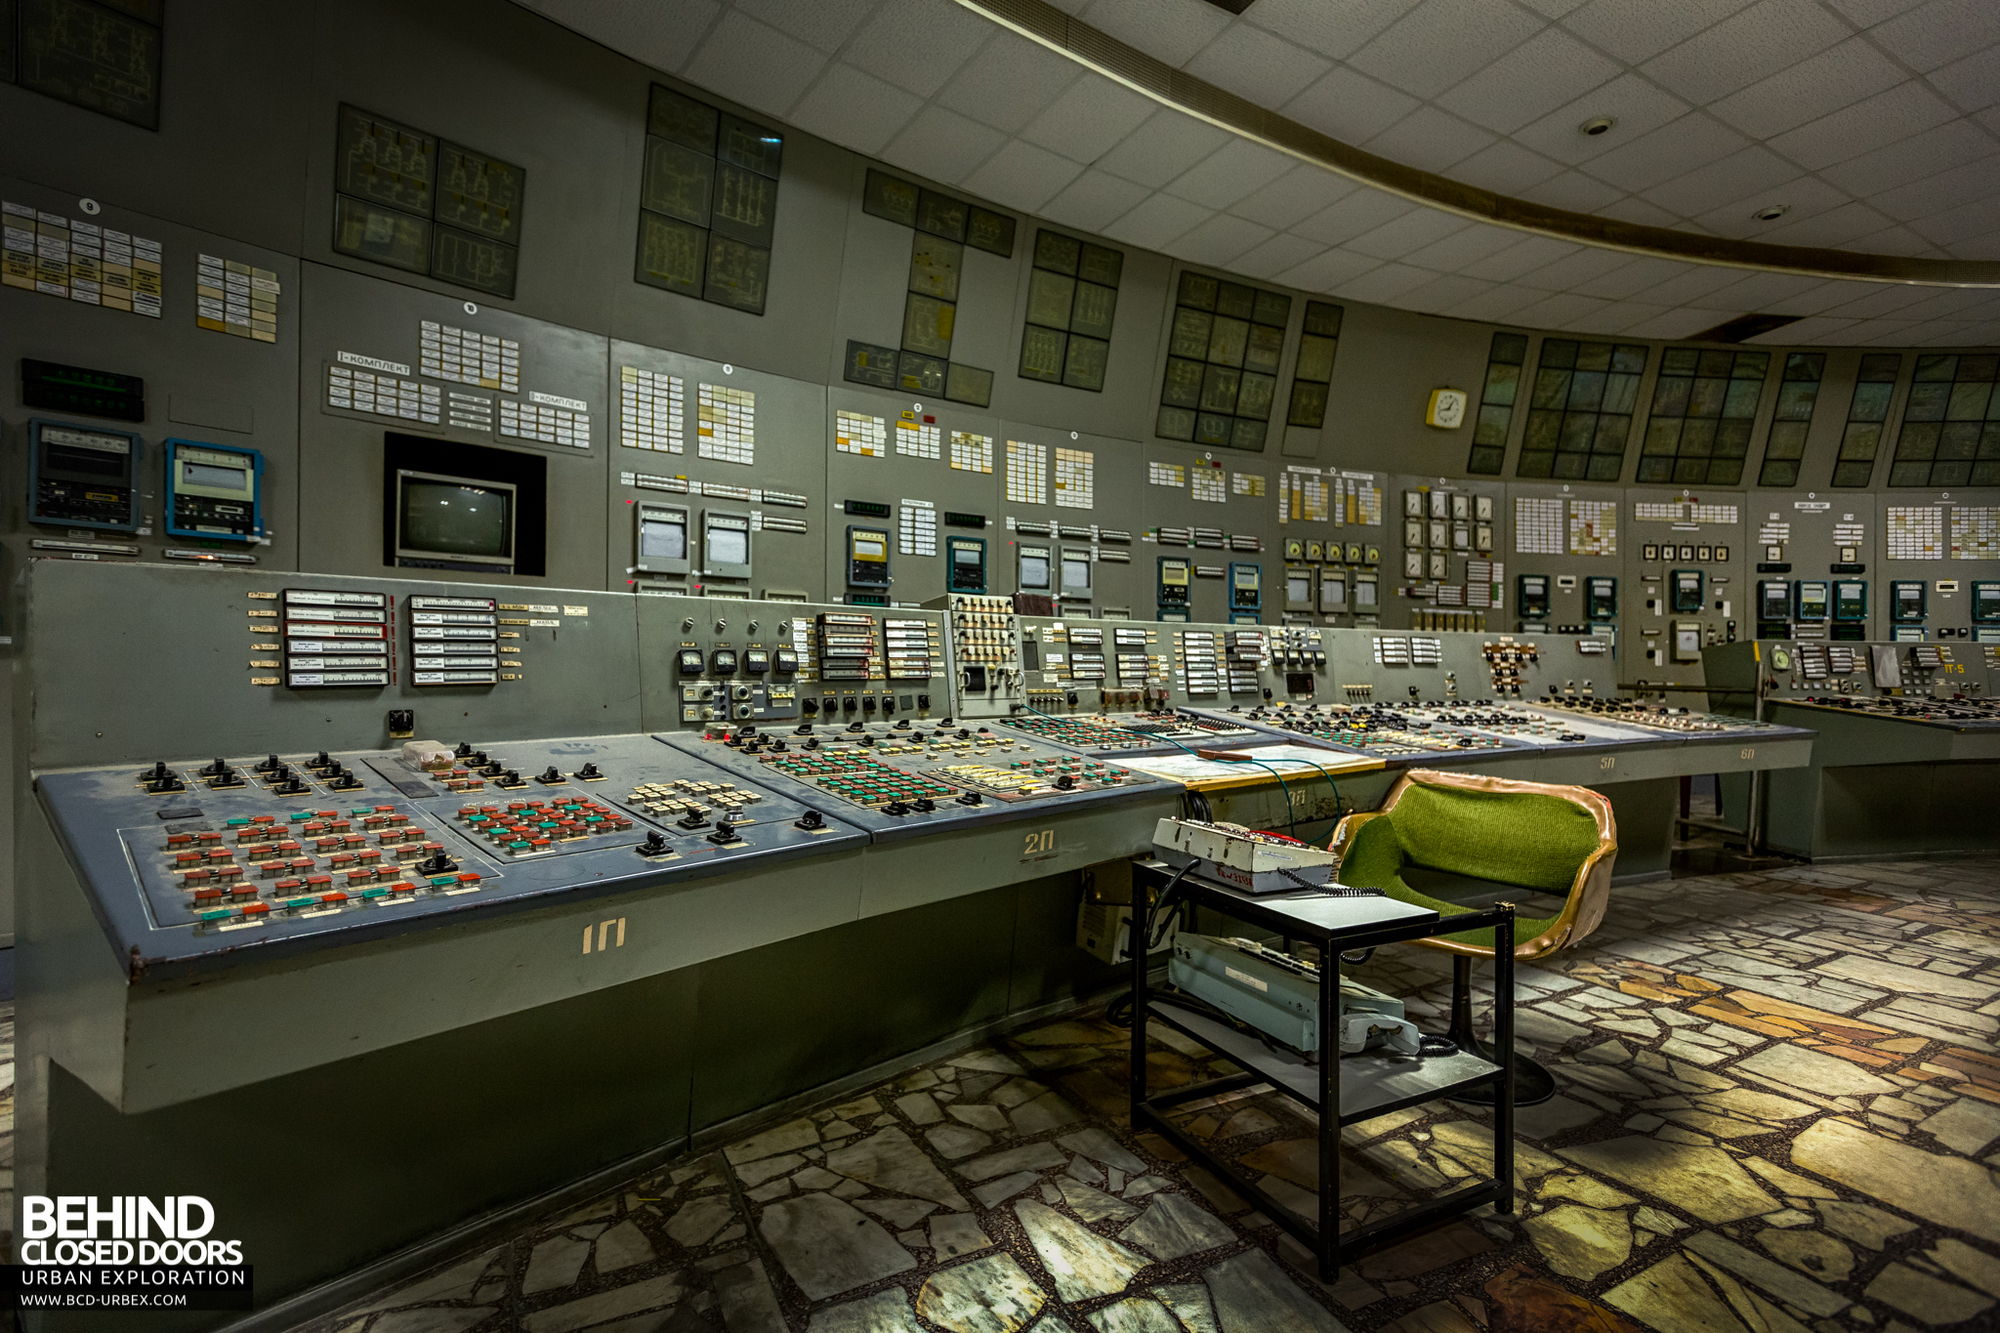 Report - - Chernobyl Nuclear Power Station, Ukraine - October 2019 ...